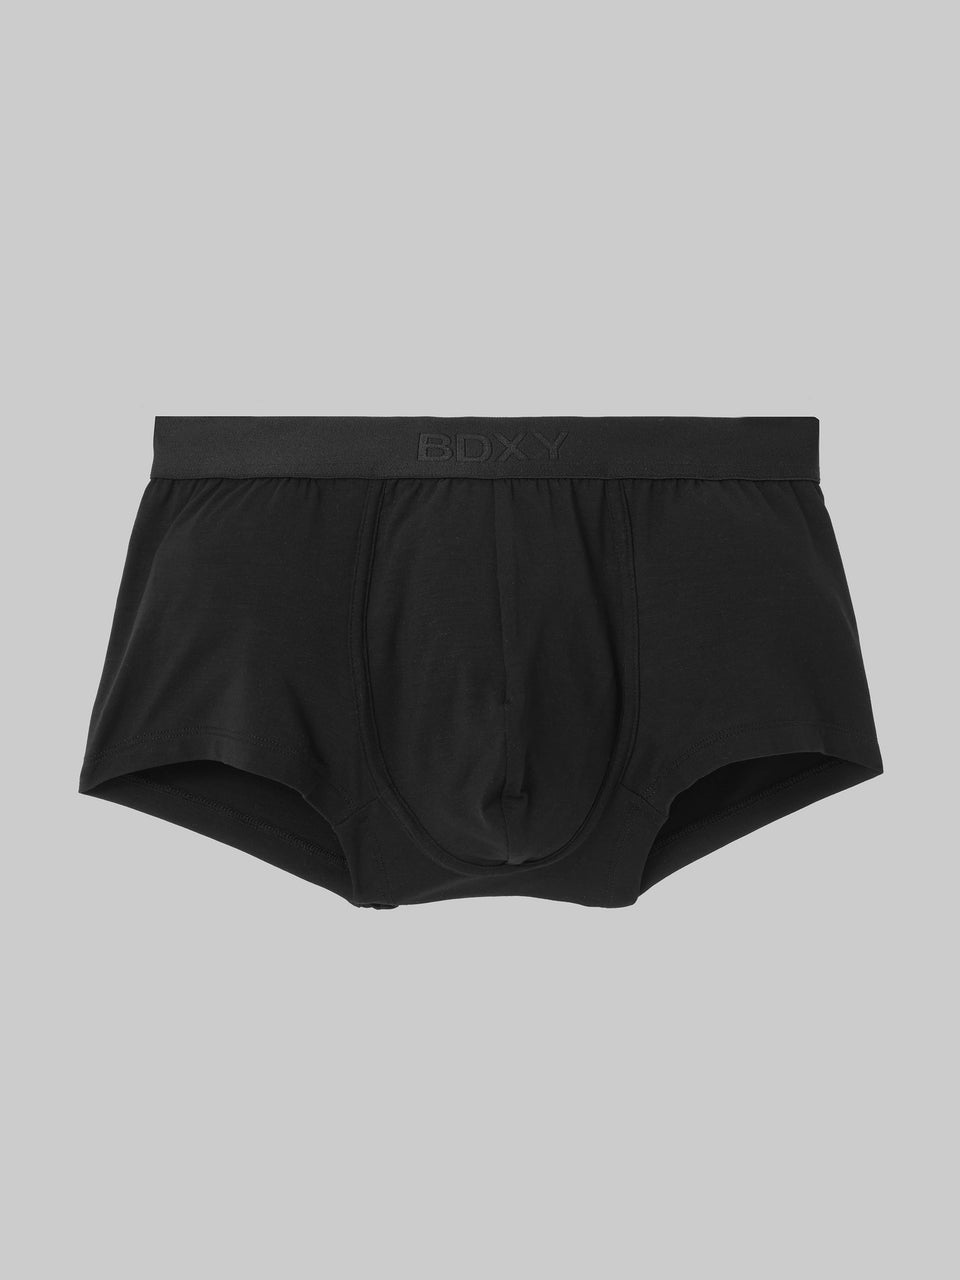 'The Boom' Underwear Boxer Black